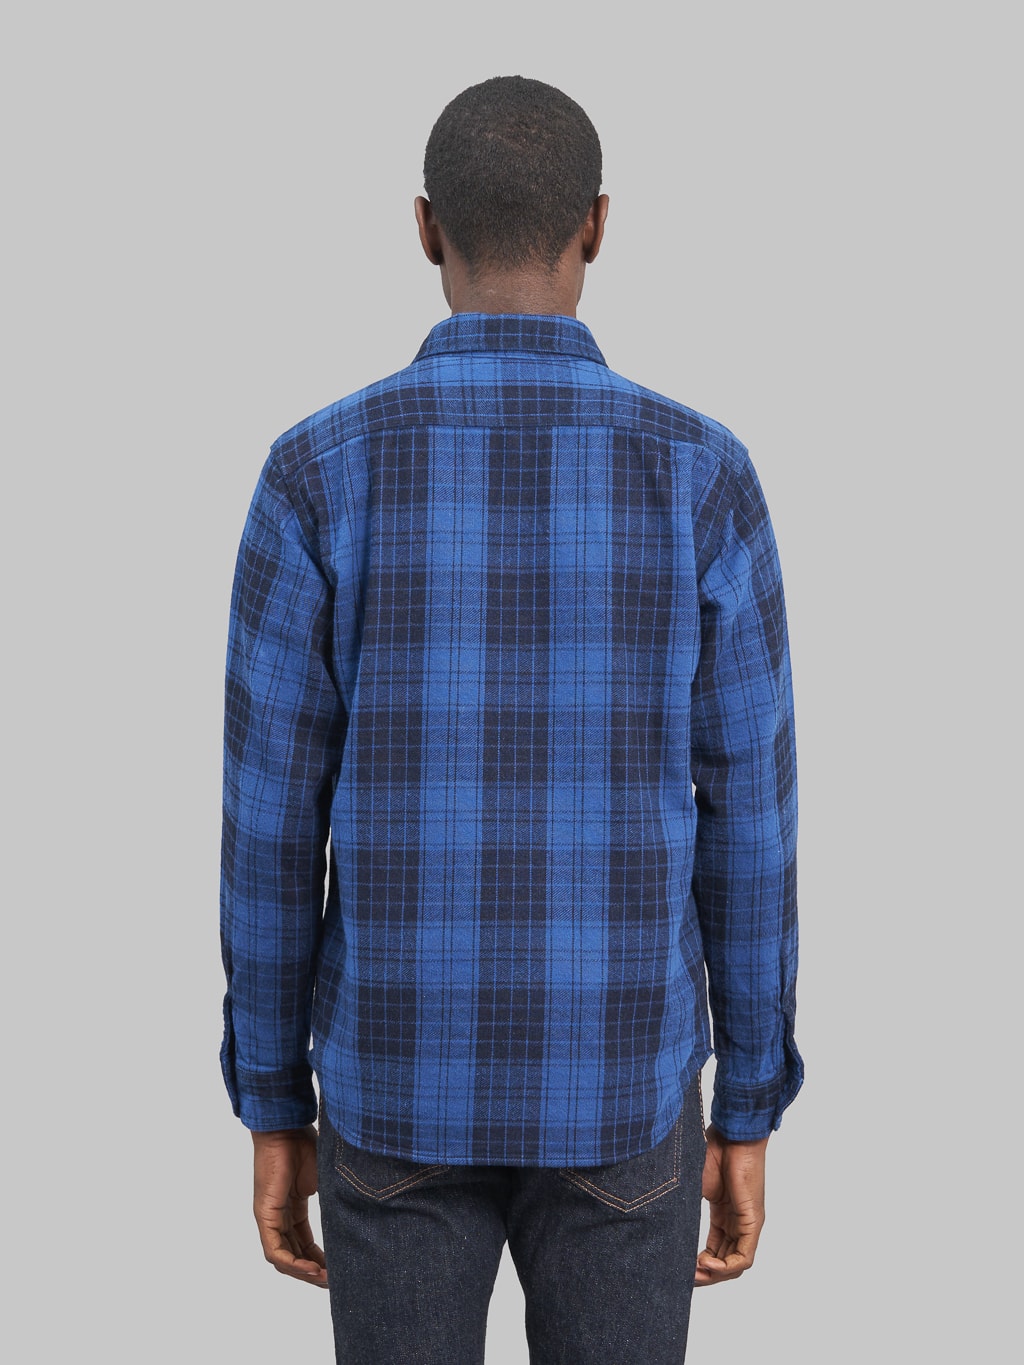 Momotaro original indigo twill check flannel shirt model back fit